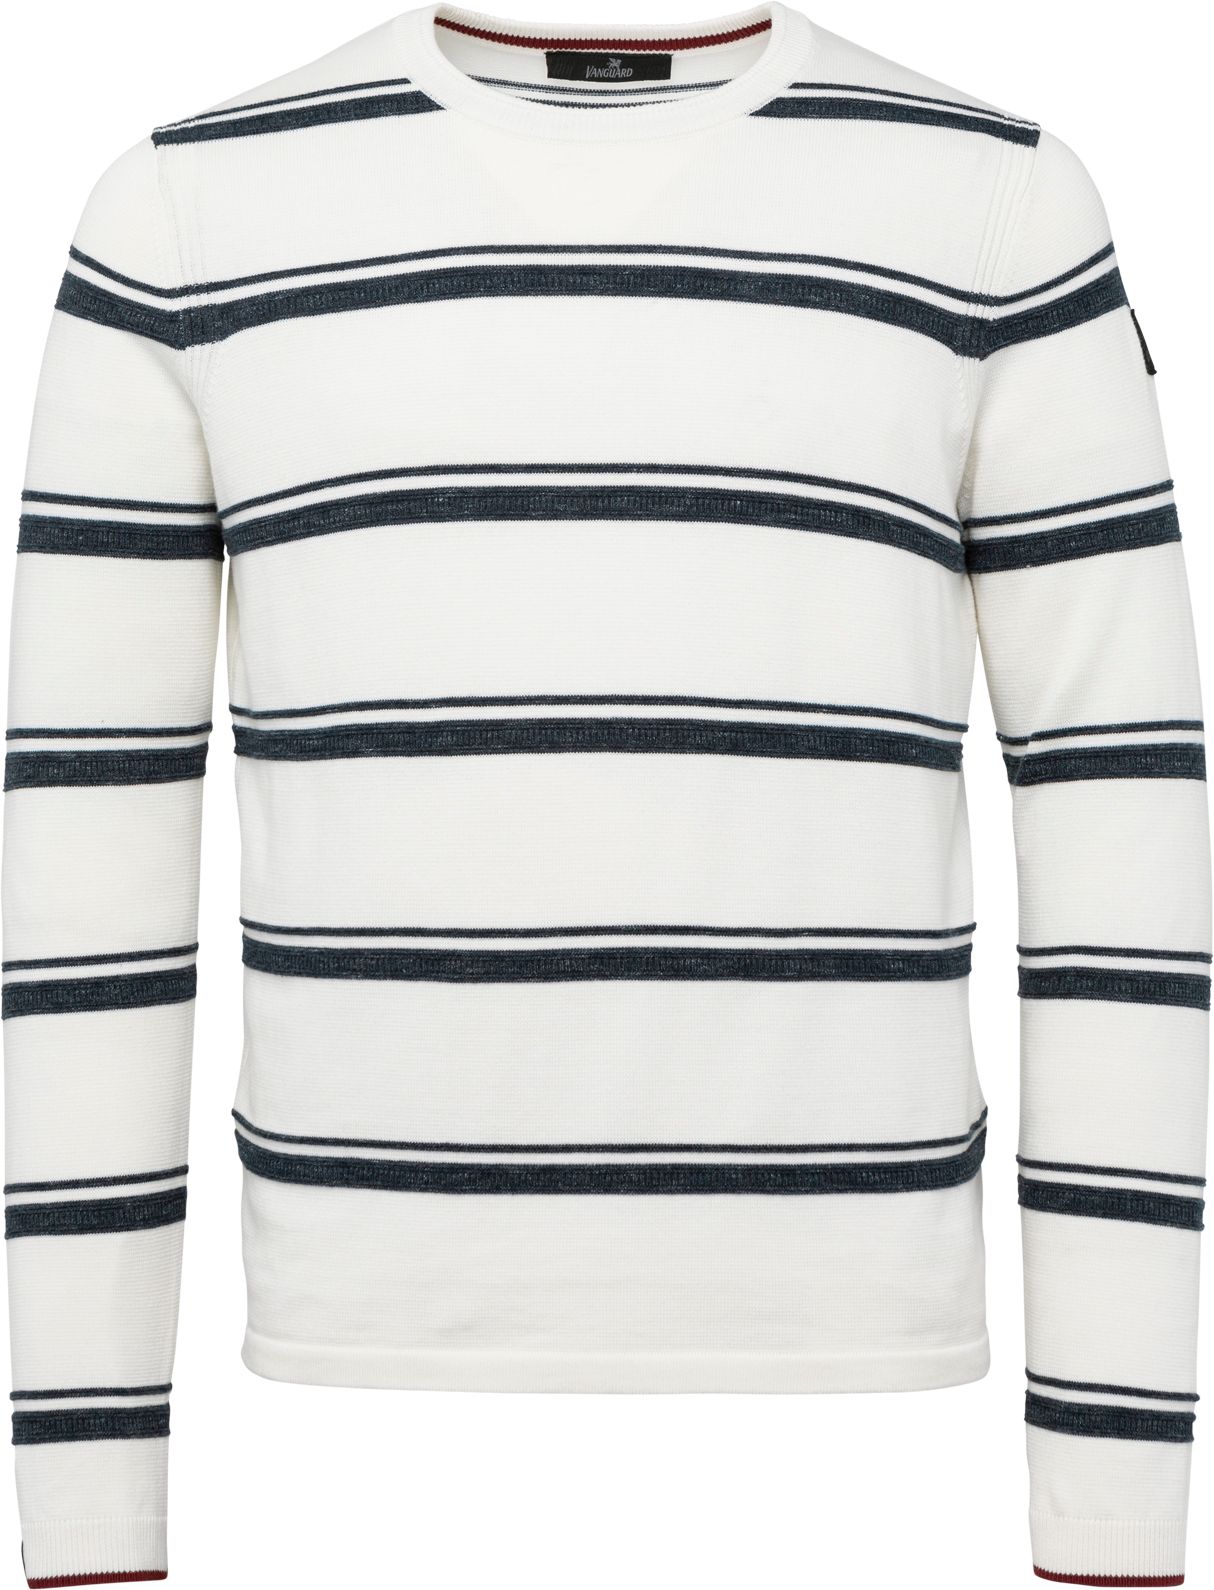 Vanguard Sweater Stripes White size 3XL